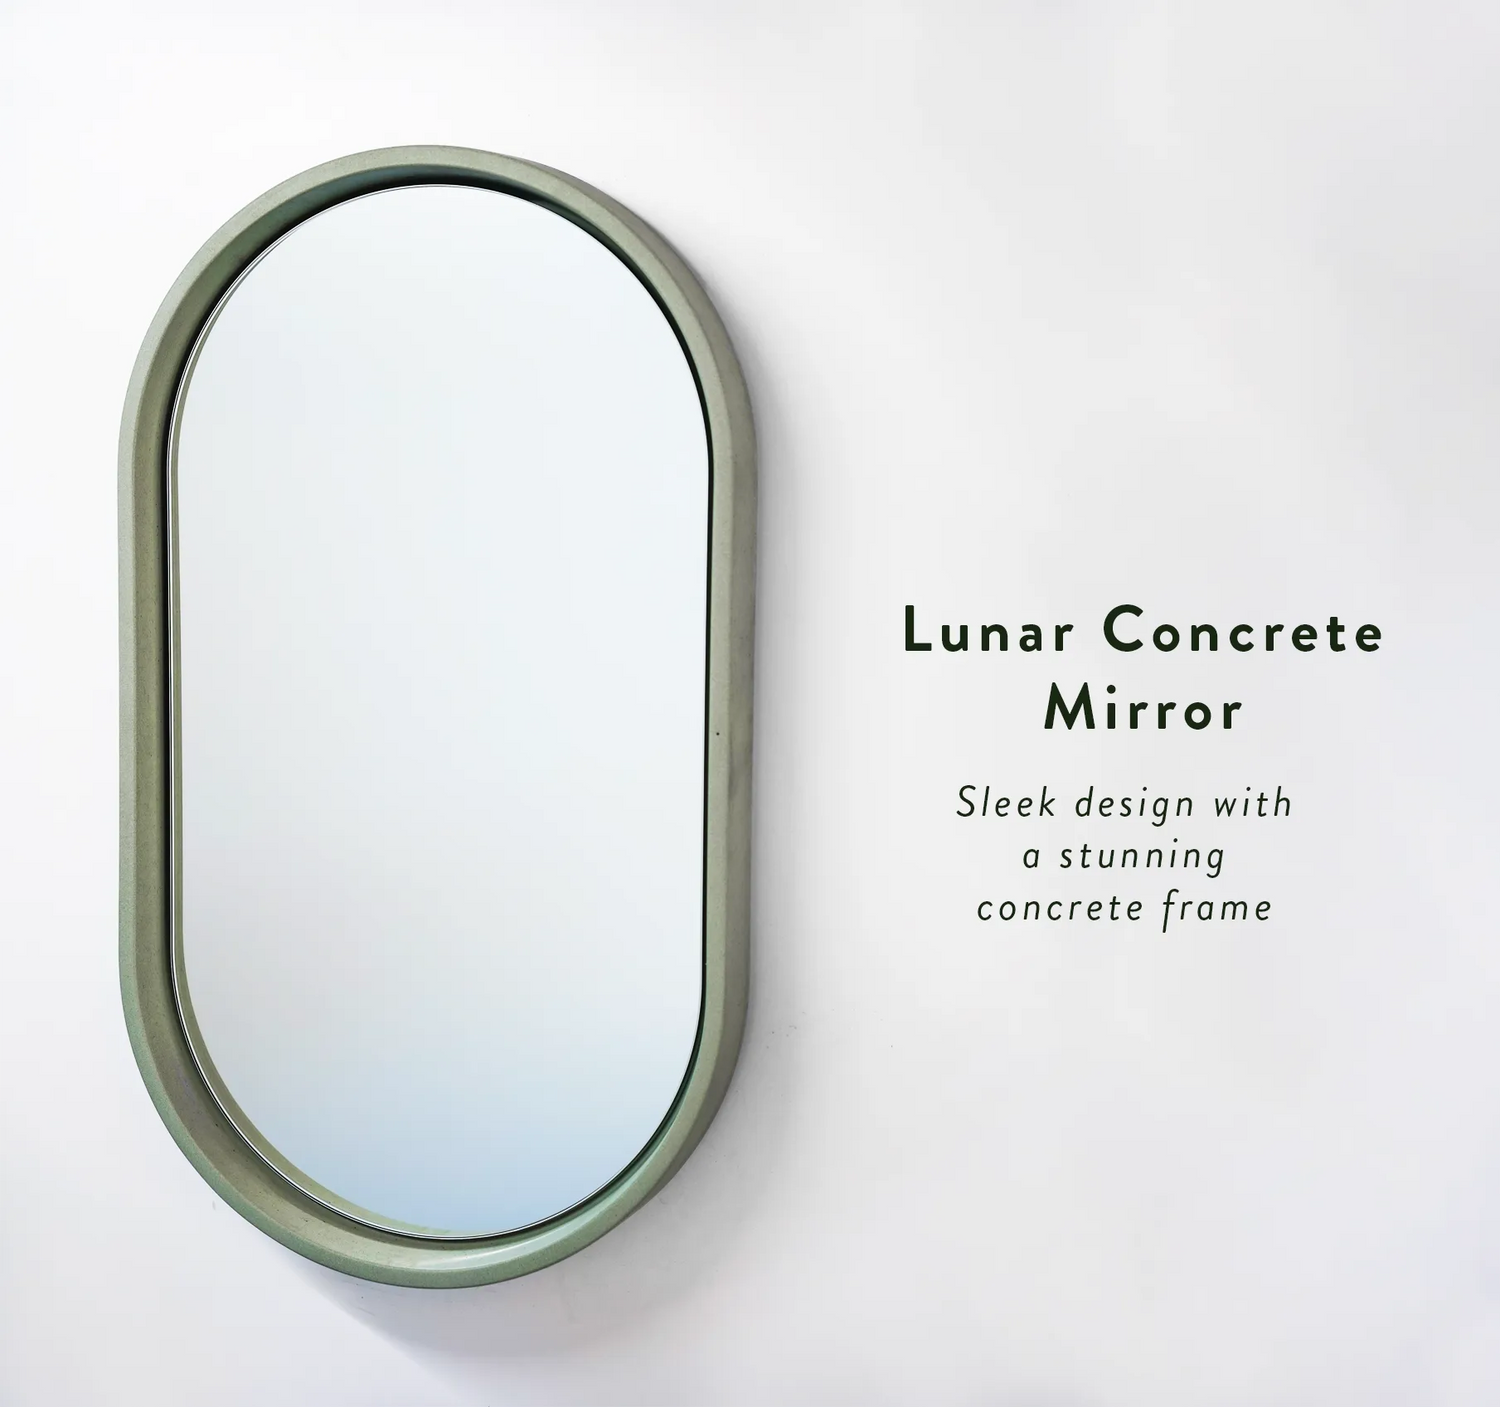 A Rainforest Green Lunar Concrete Mirror on a white wall with the text "Lunar Concrete Mirror - sleek design with a stunning concrete frame."